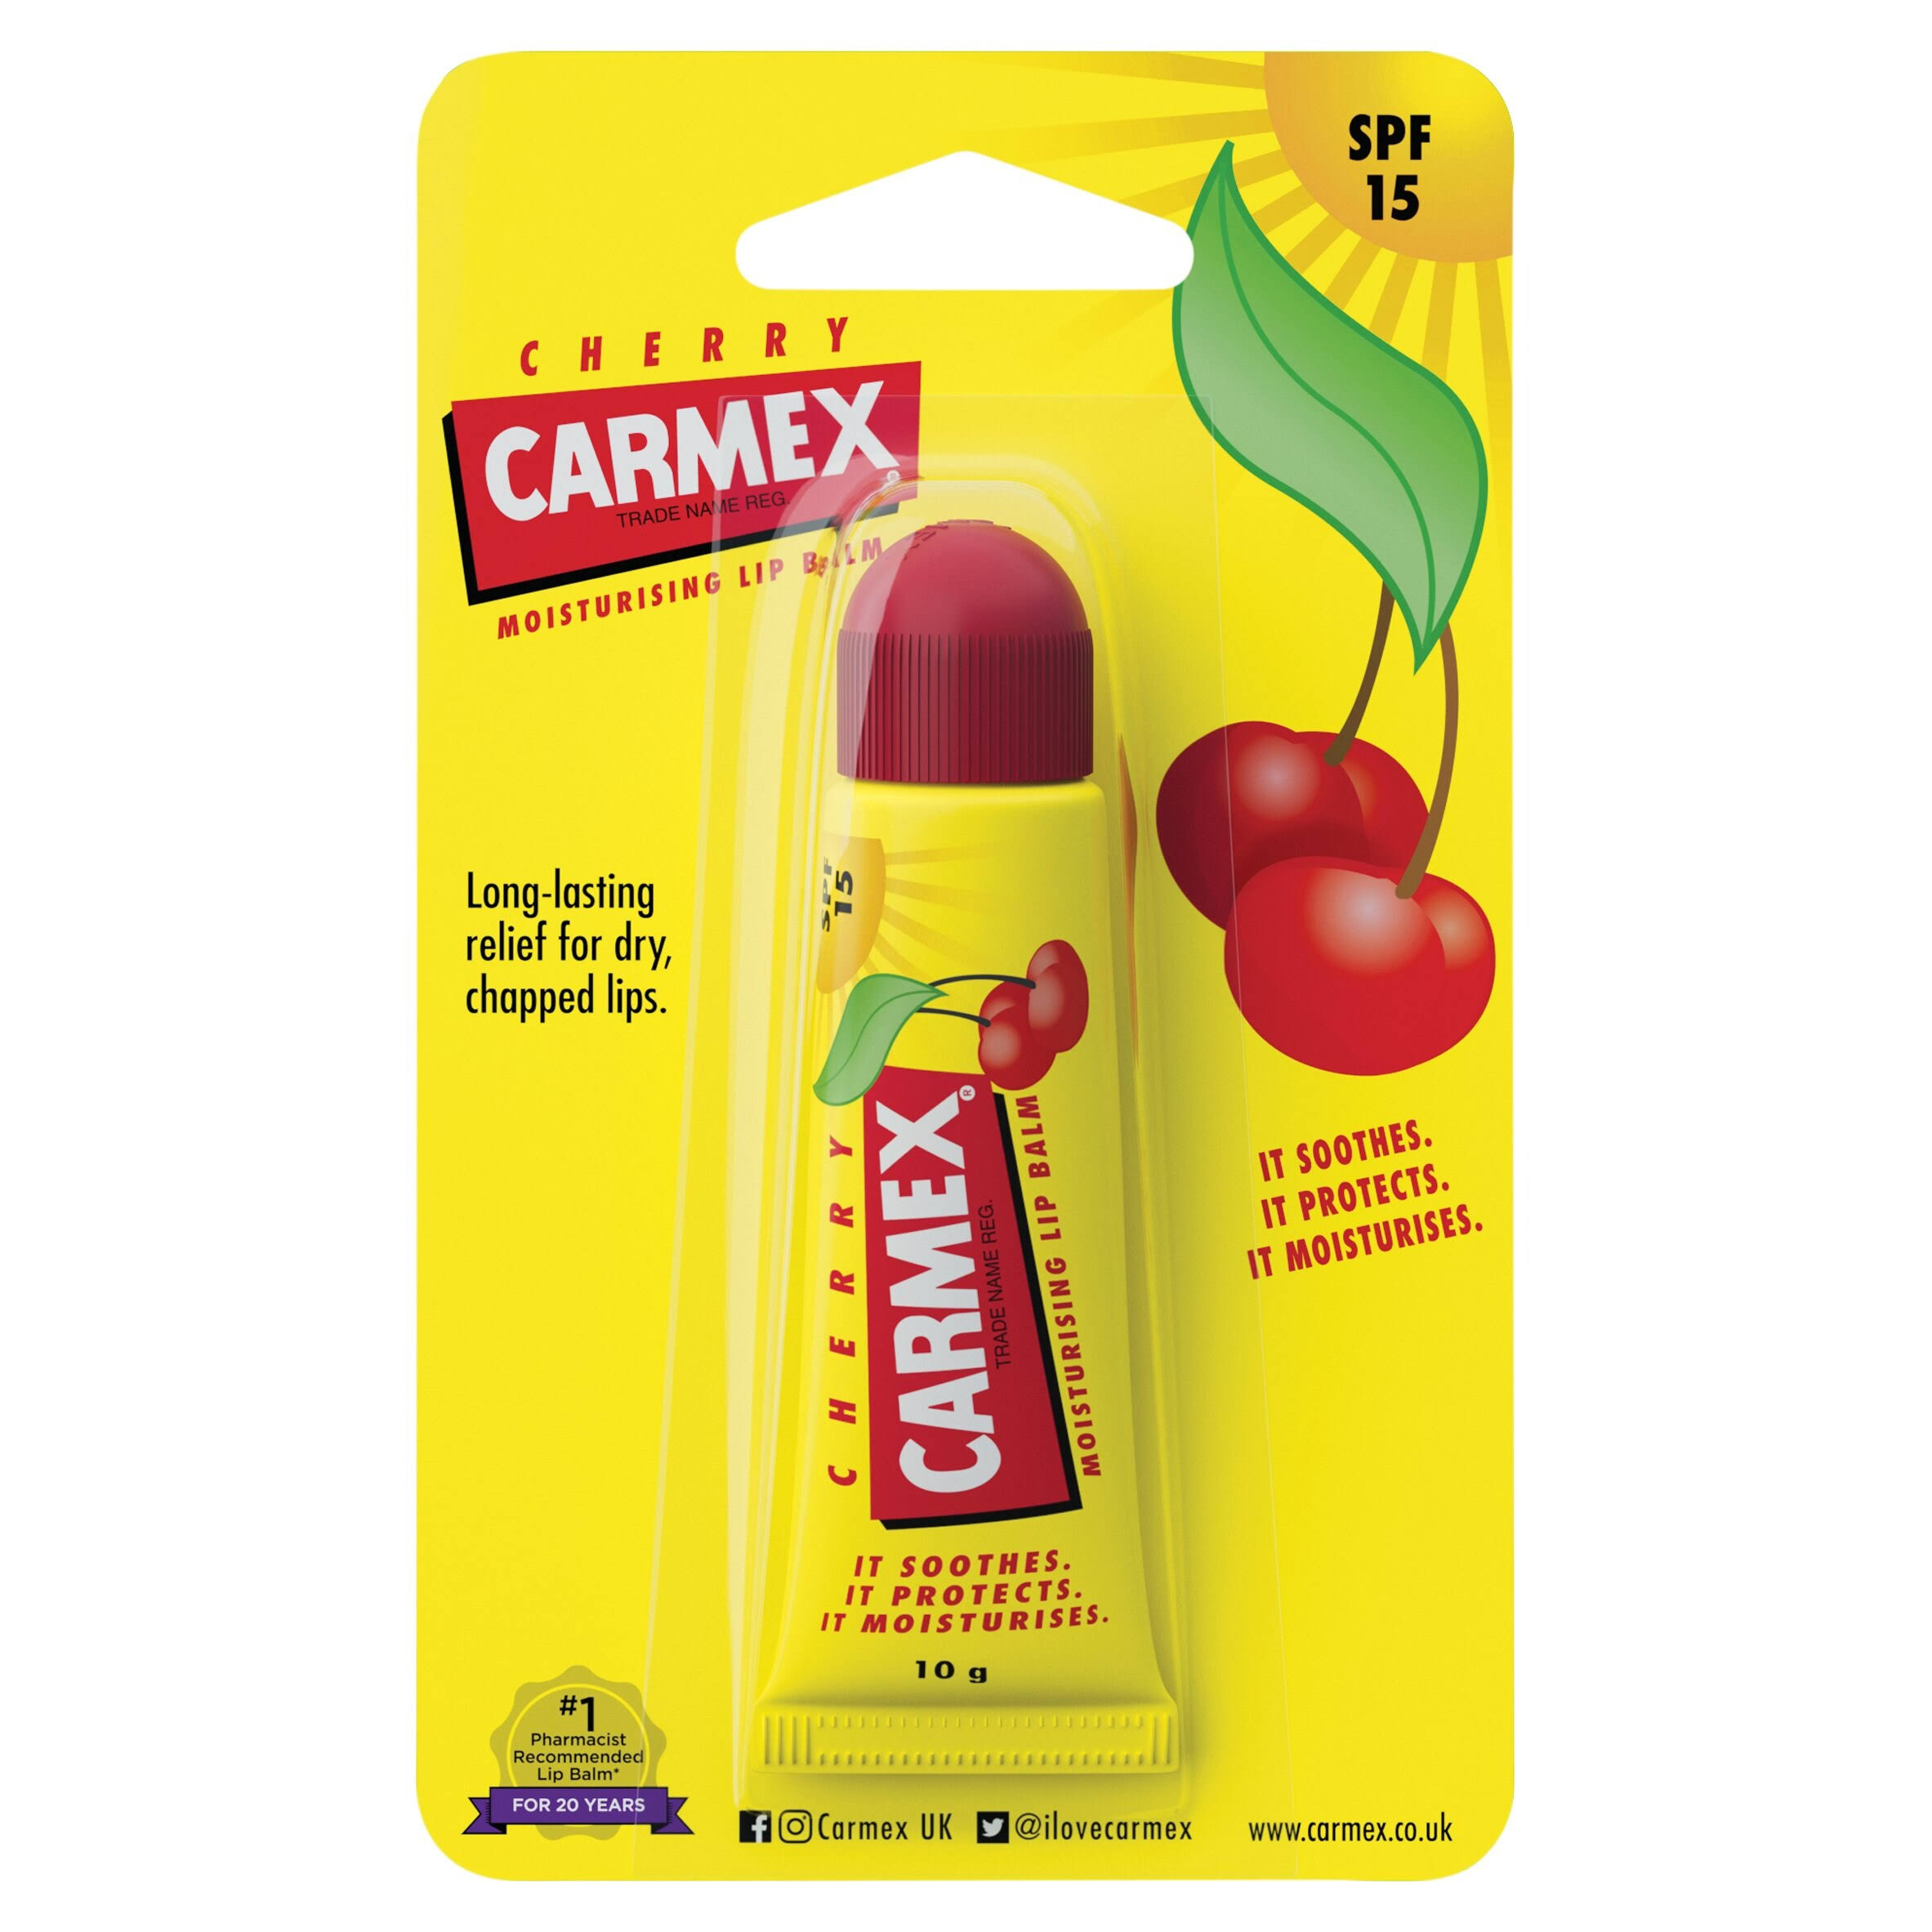 Carmex Cherry Moisturising Lip Balm SPF15 - 10g